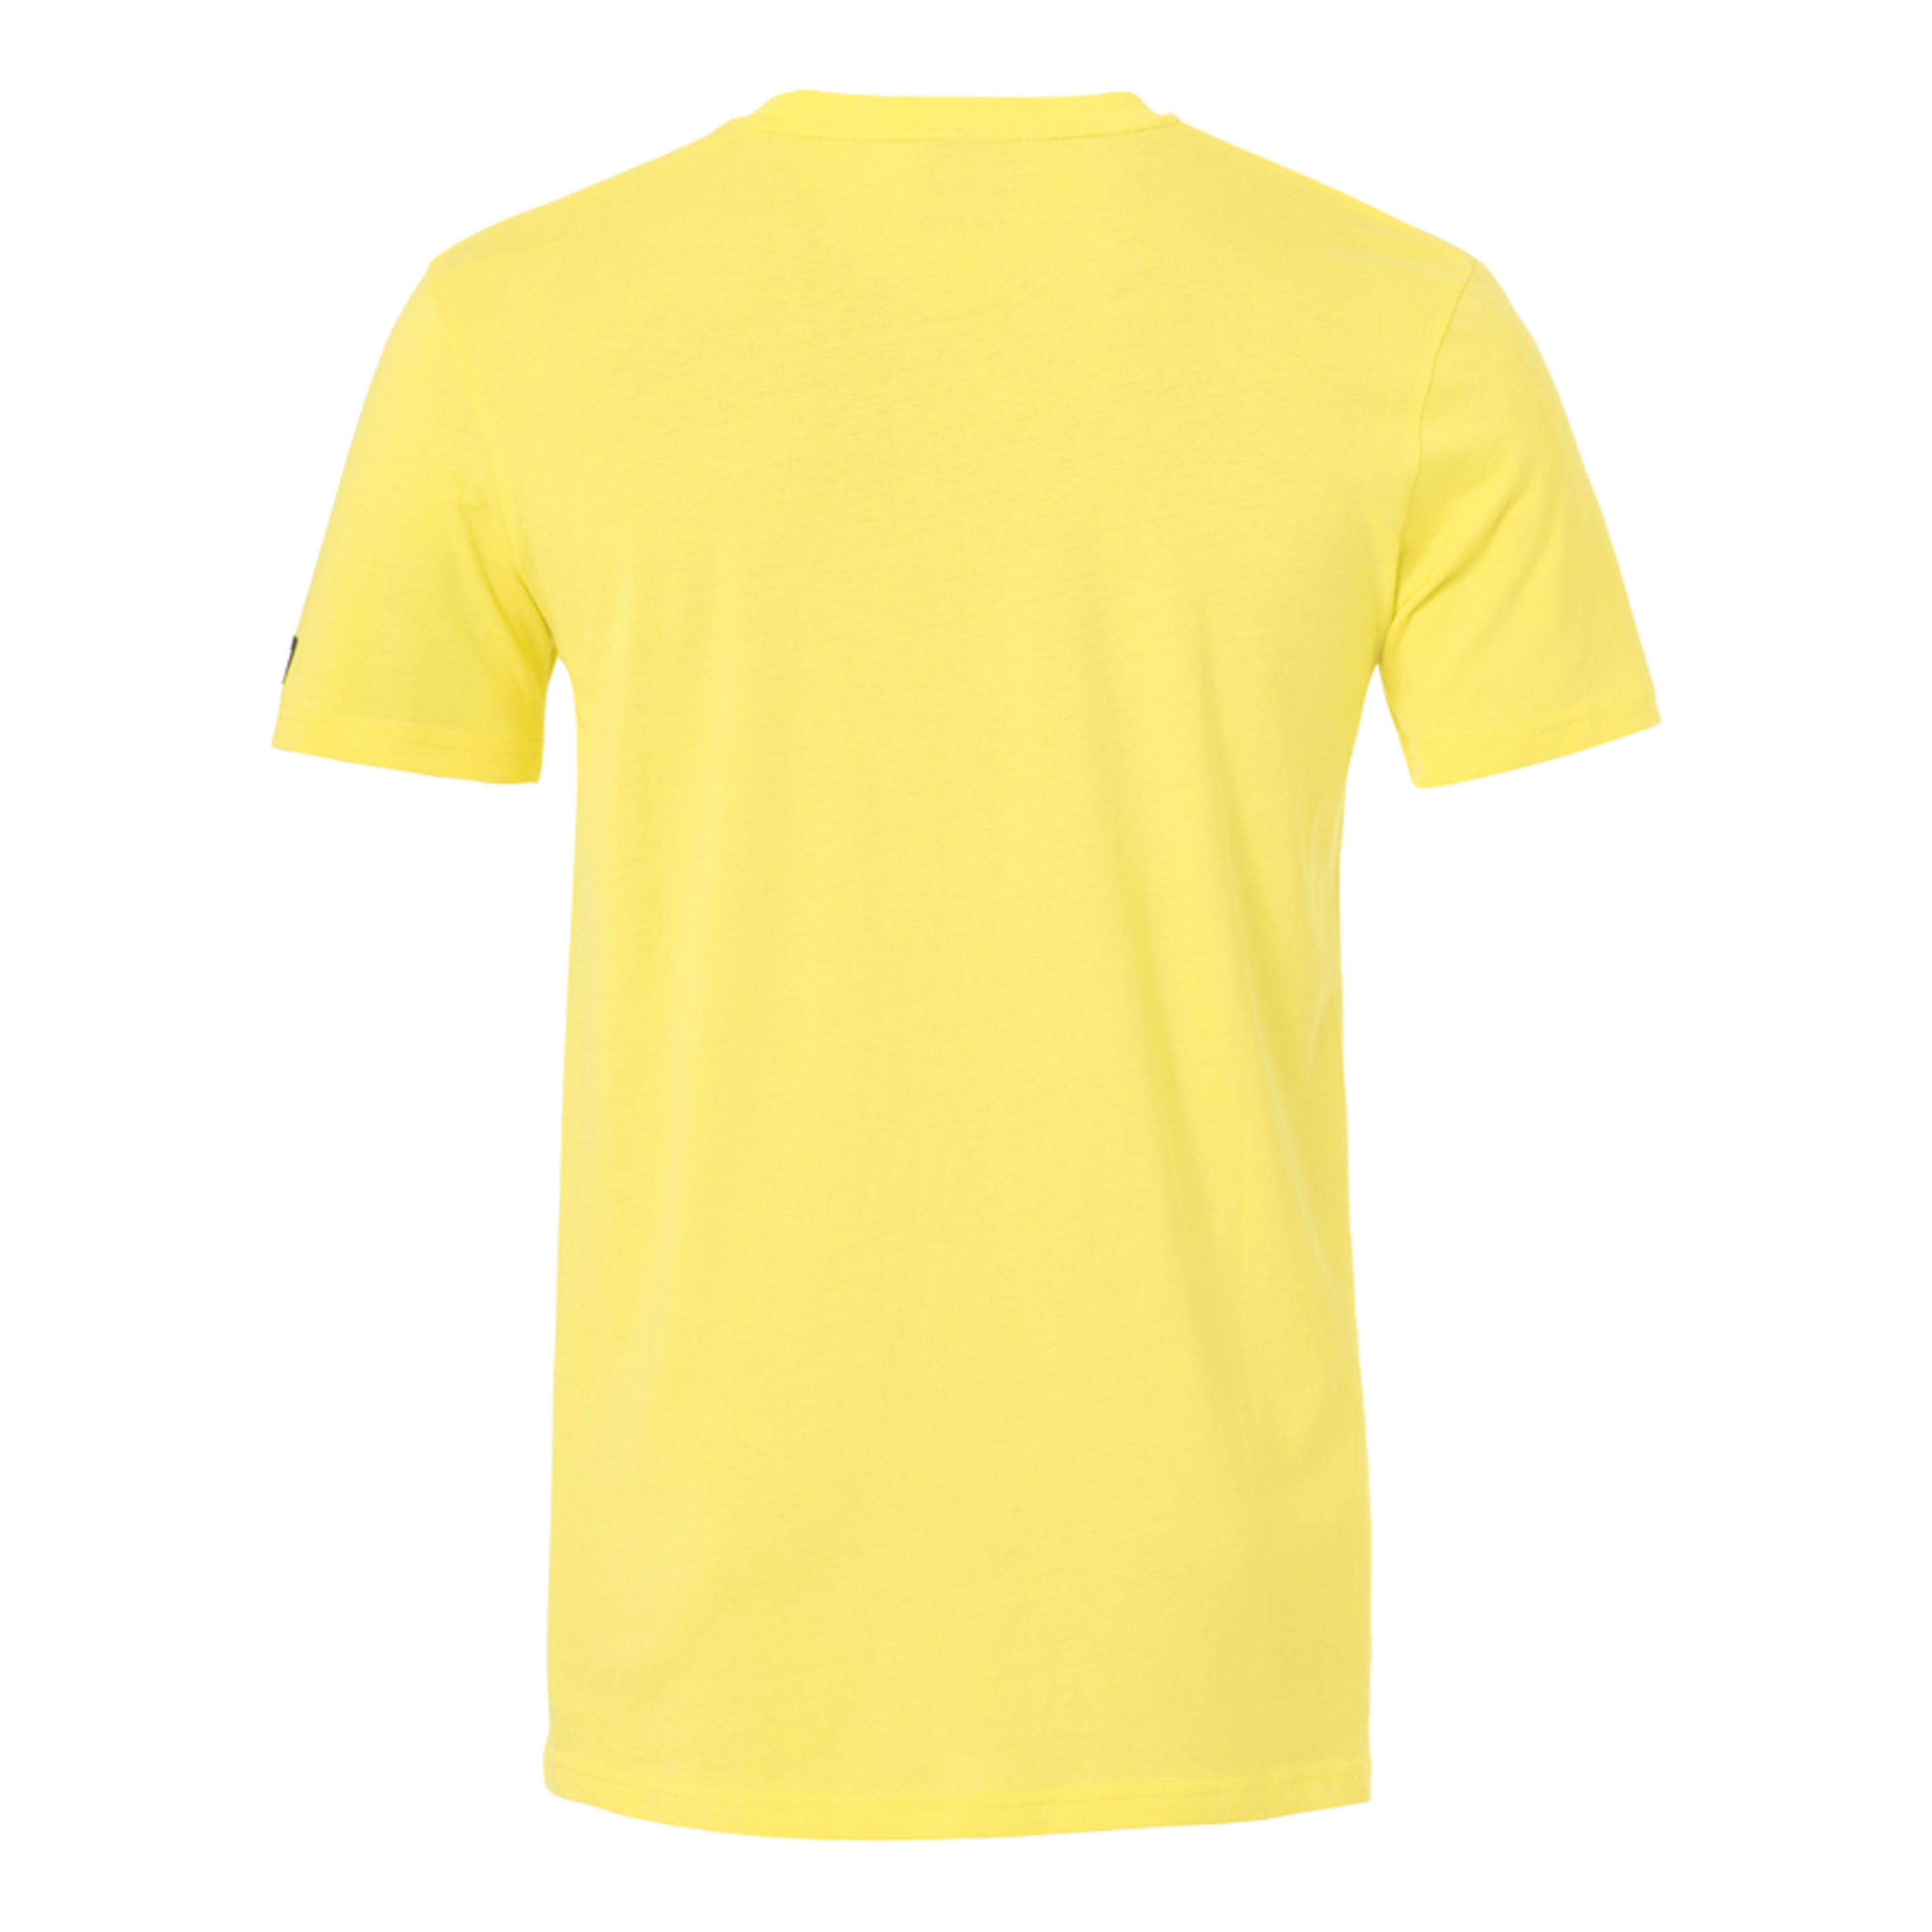 Team Camiseta Lima Amarillo Kempa - amarillo - Team Camiseta Lima Amarillo Kempa  MKP